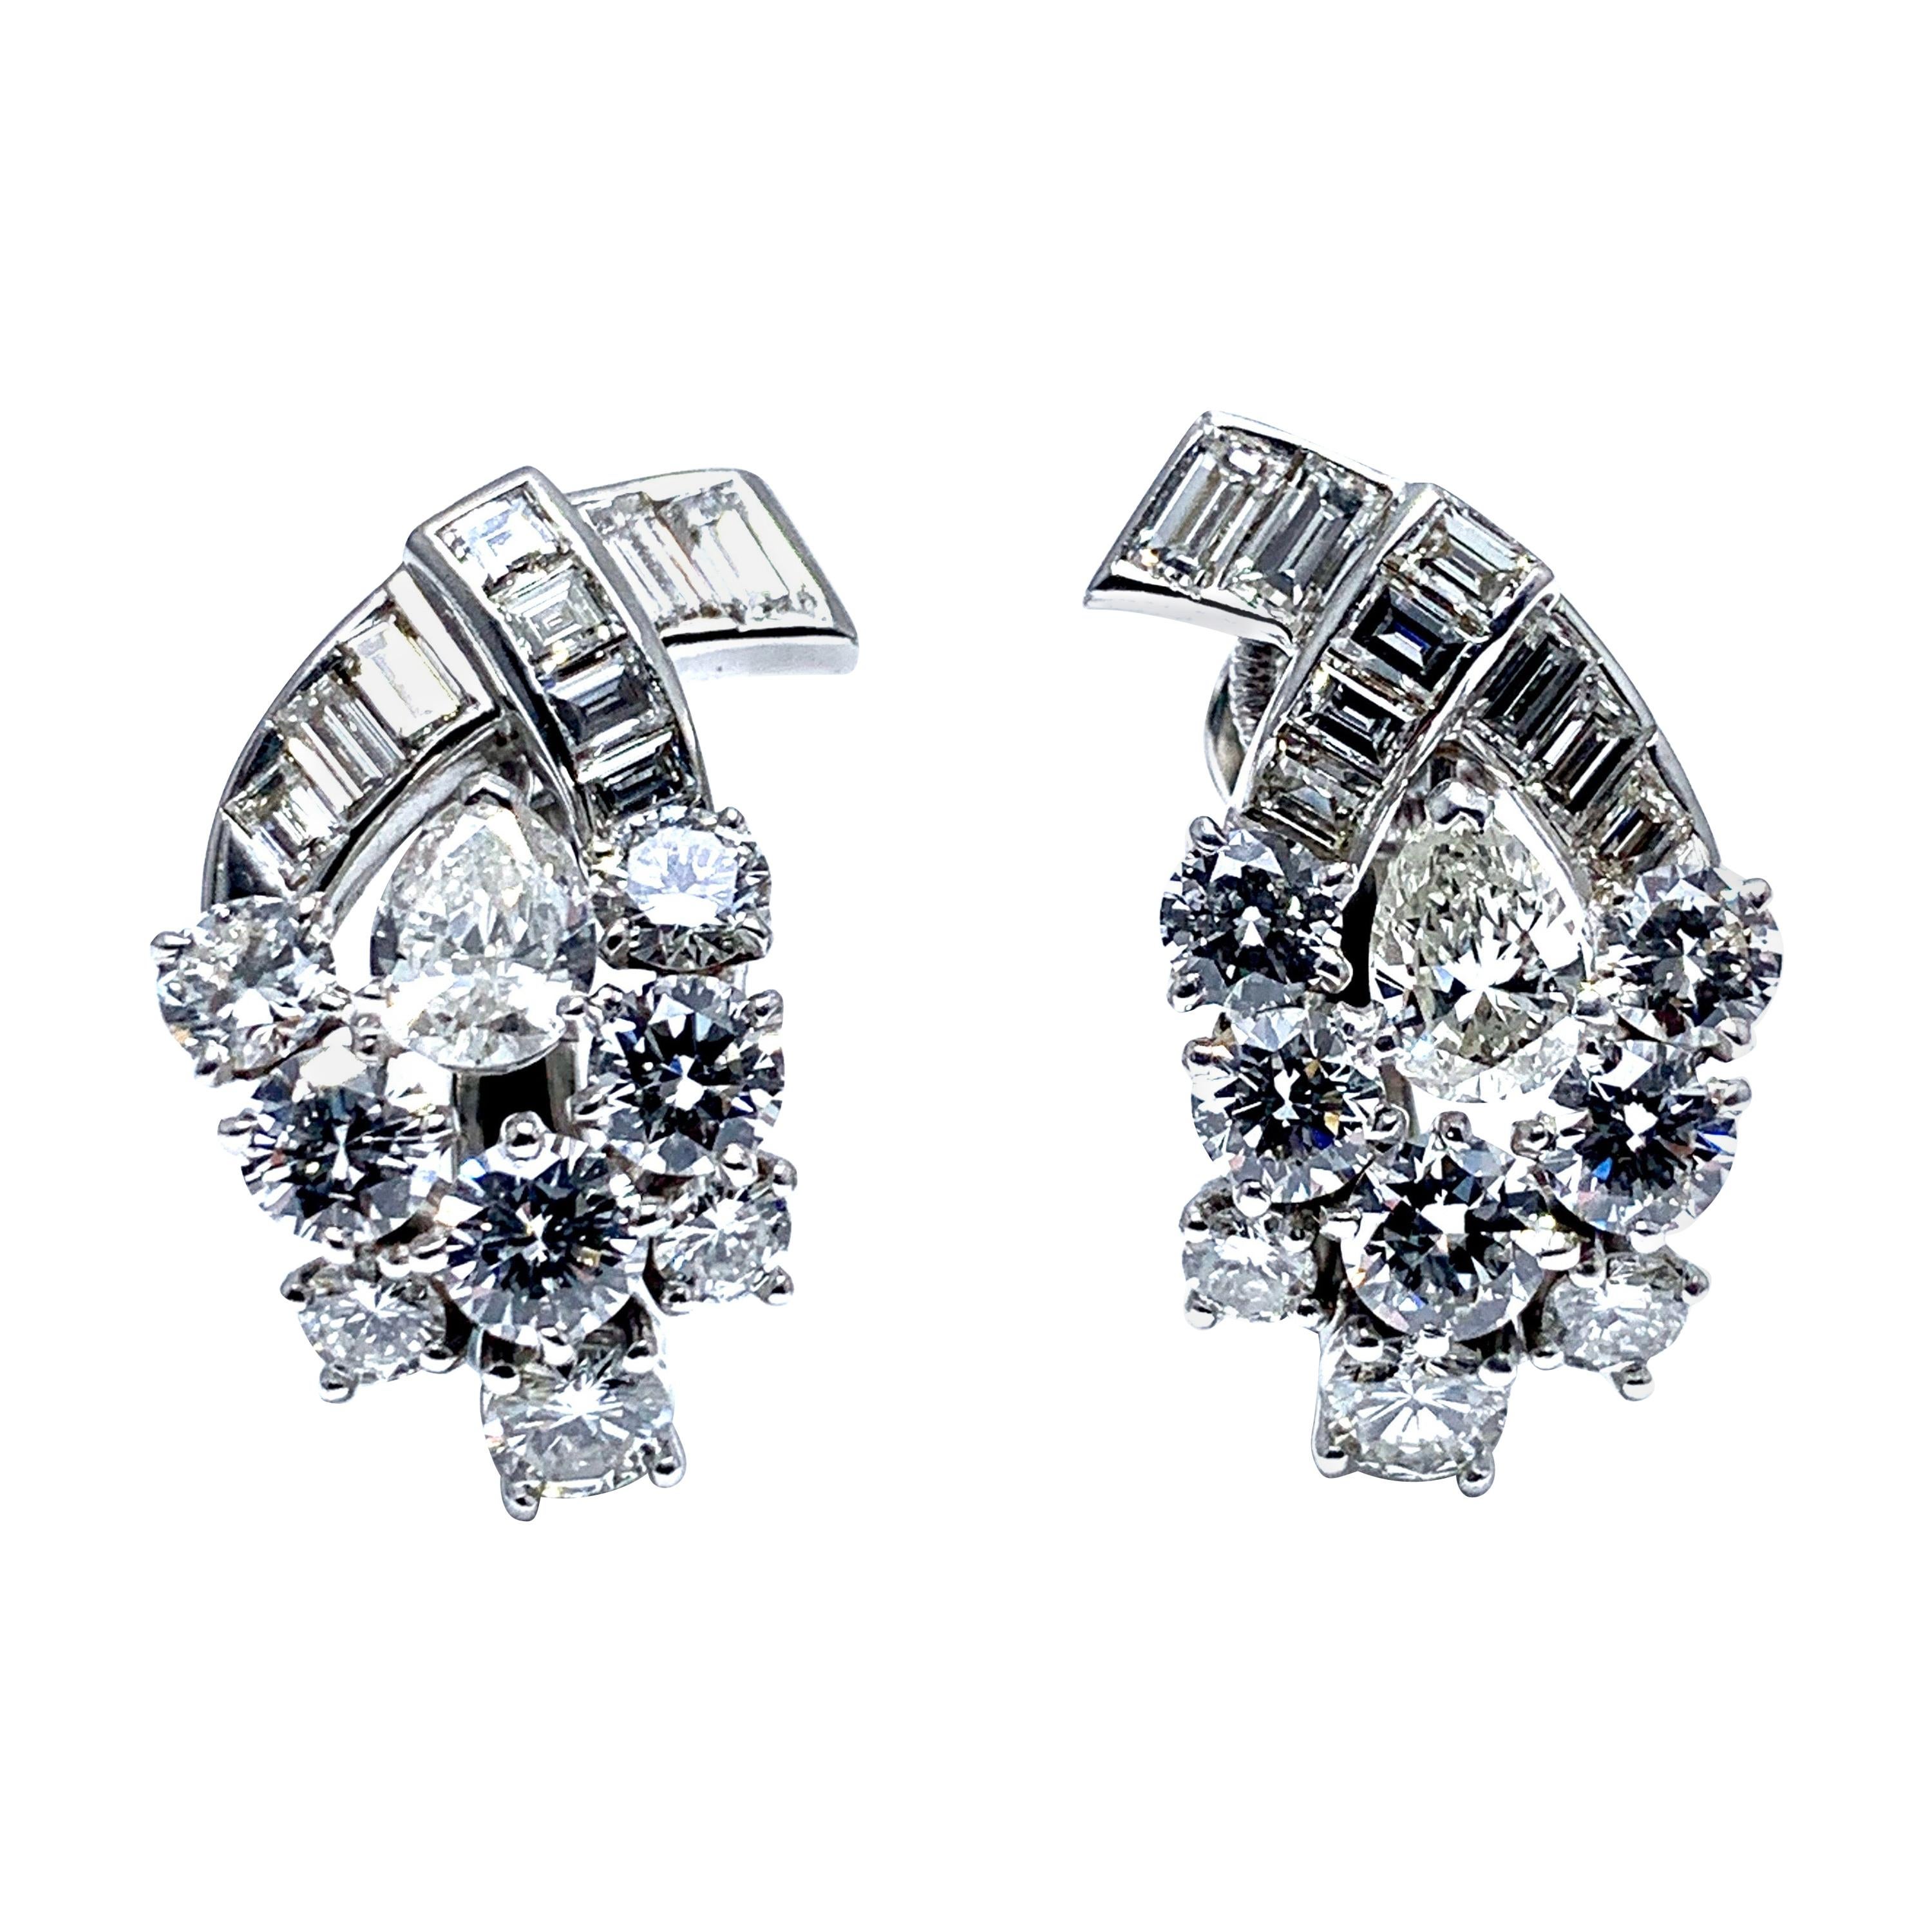 5.32 Carat Diamond and Platinum Clip Earrings